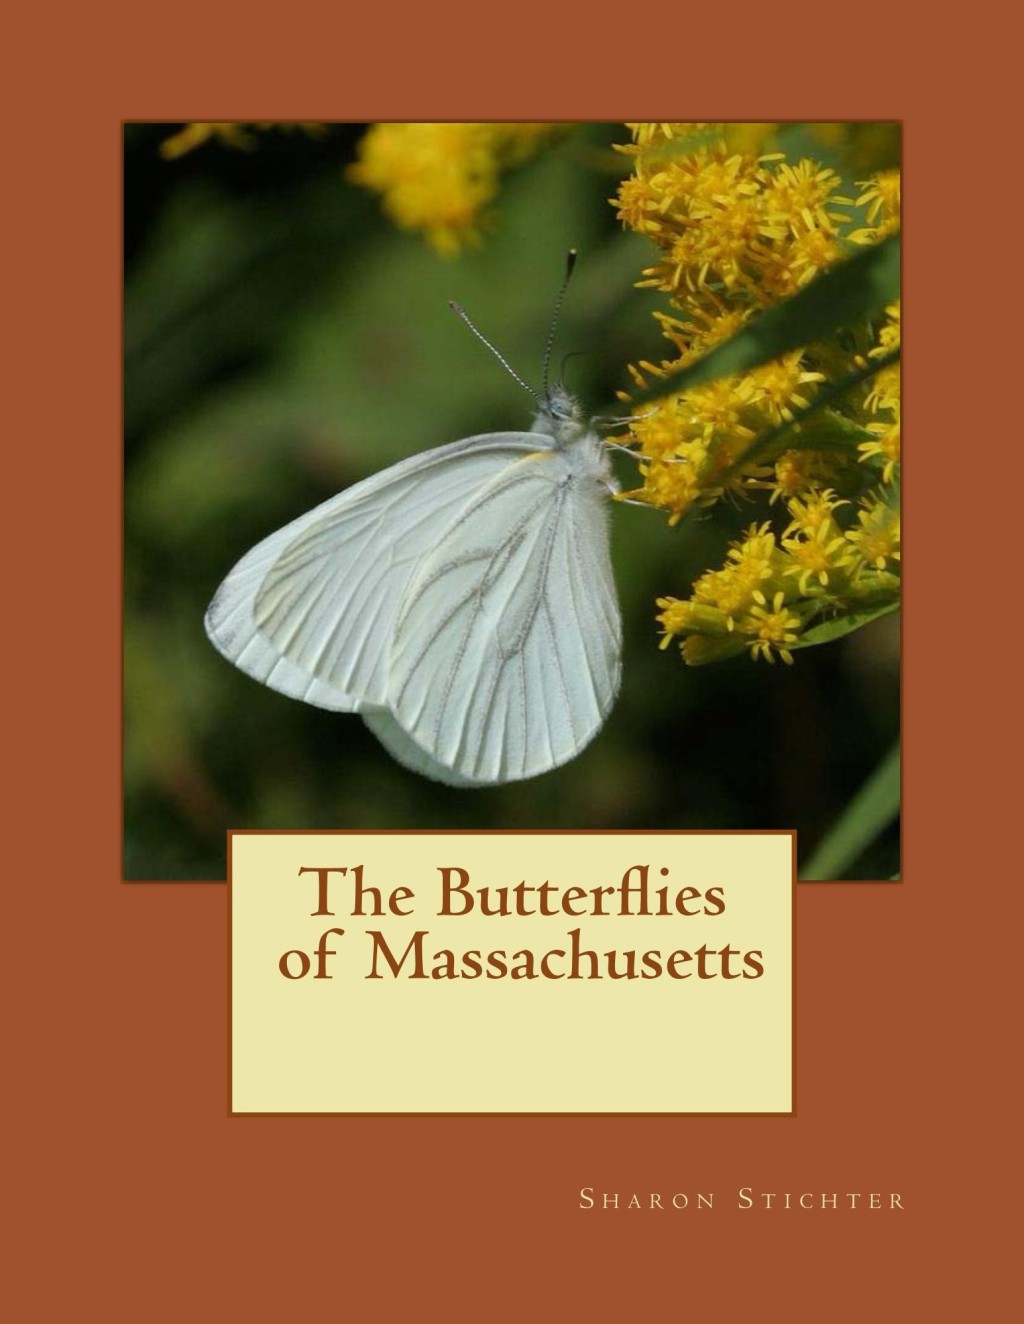 BOOK REVIEW: The Butterflies of Massachusetts by Sharon Stichter